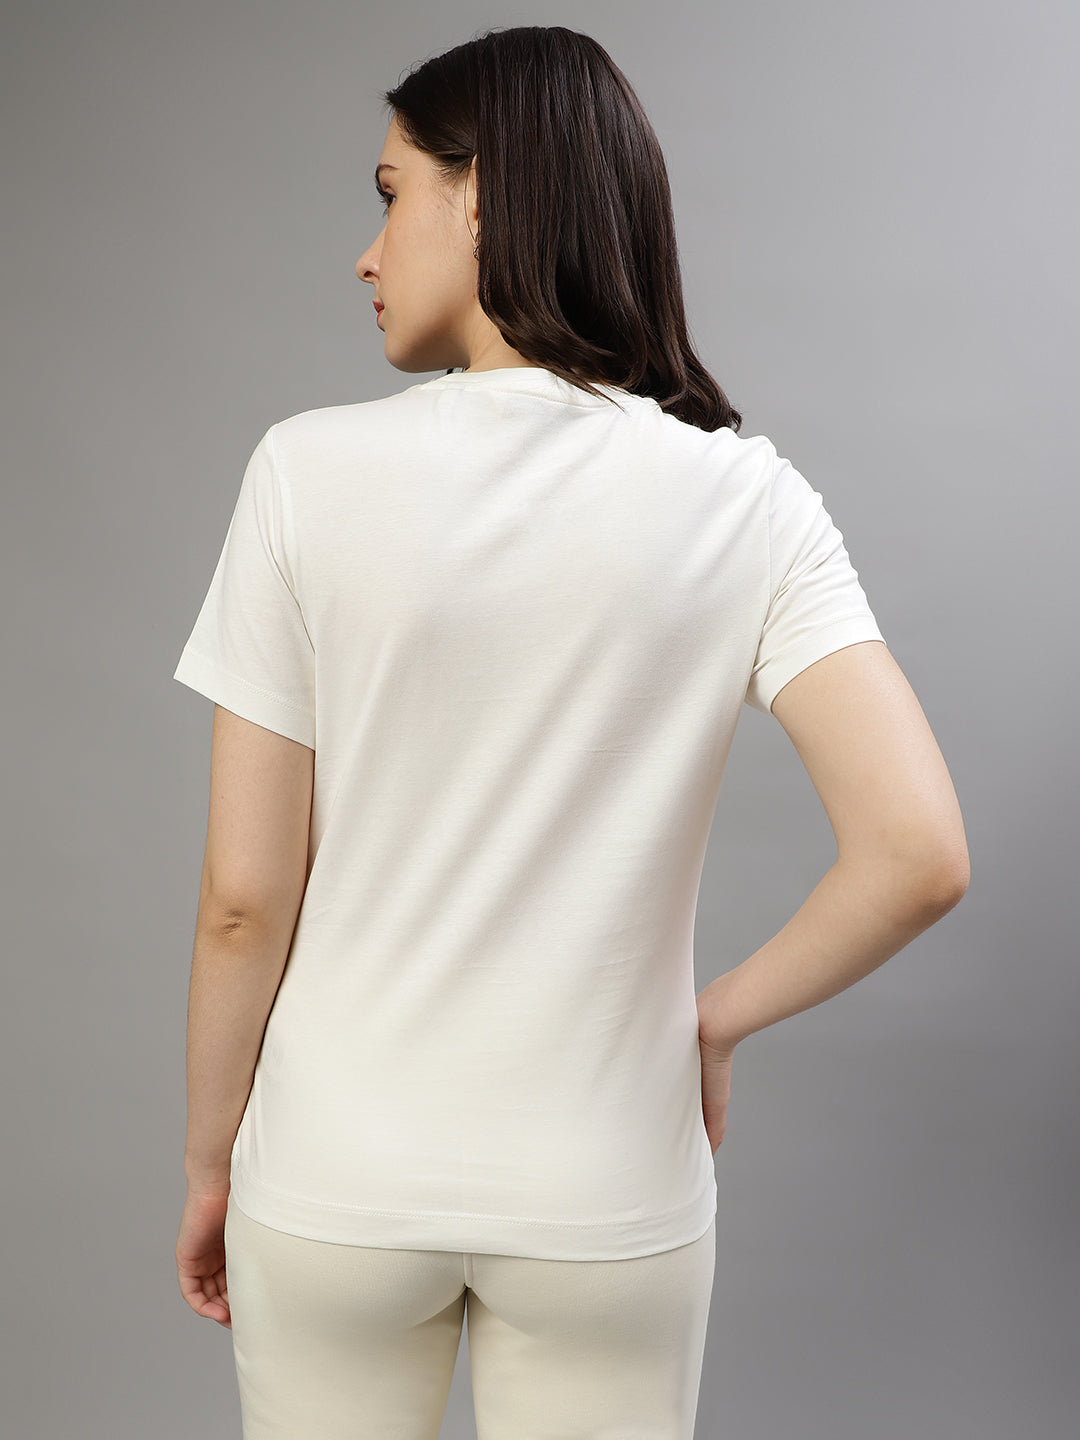 Gant White Fashion Printed Regular Fit T-Shirt